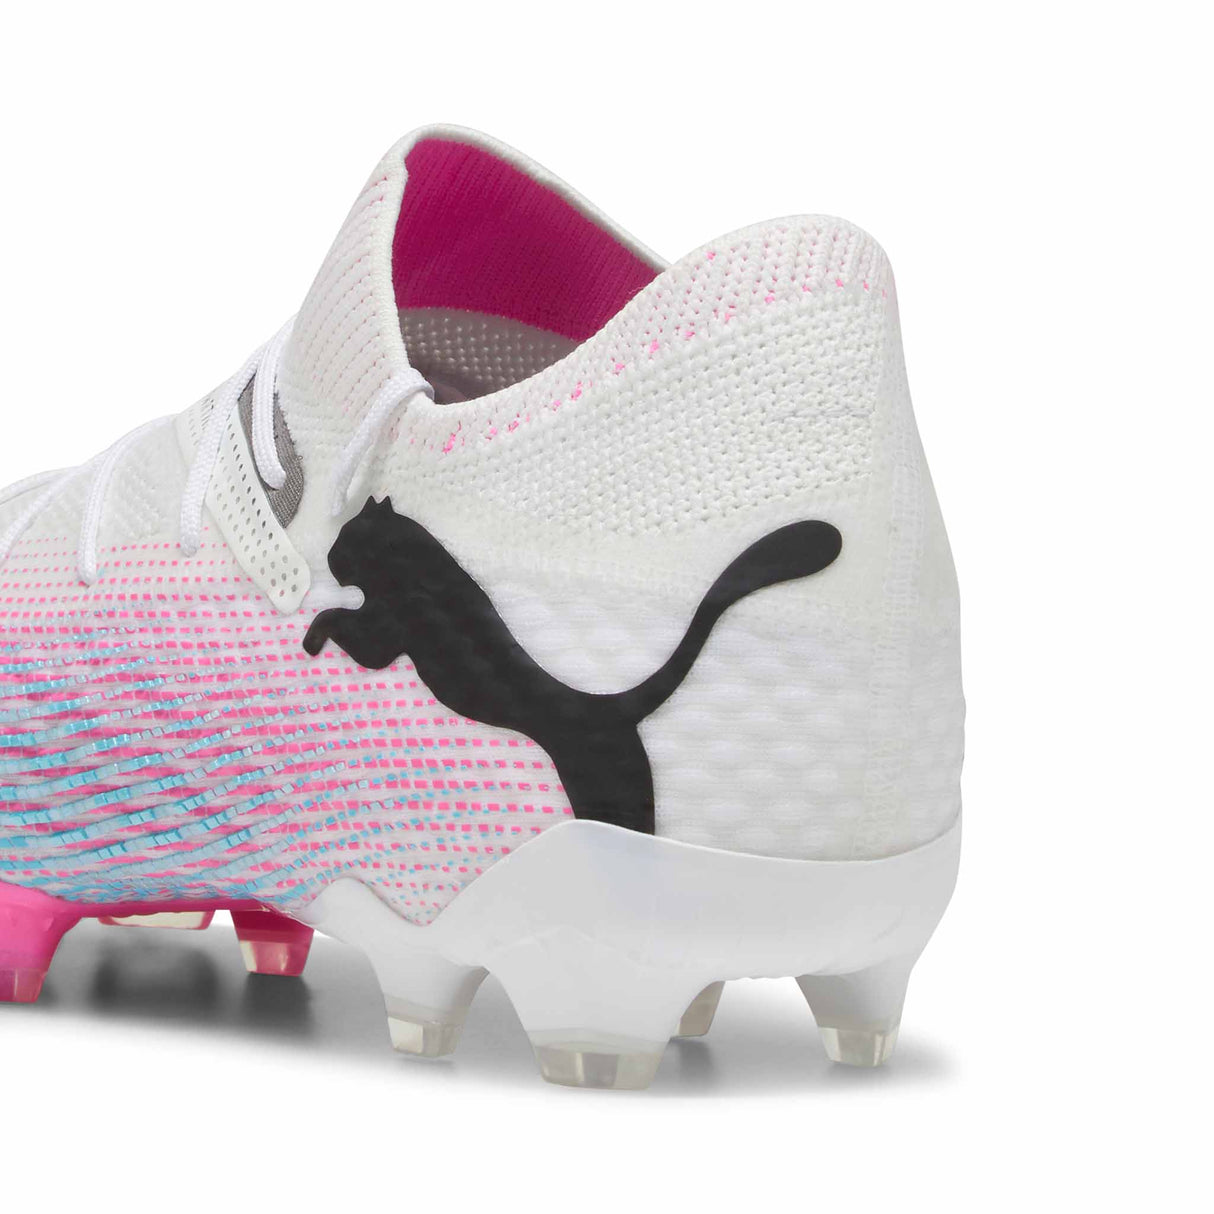 Puma Future 7 Ultimate FG/AG chaussures de soccer à crampons